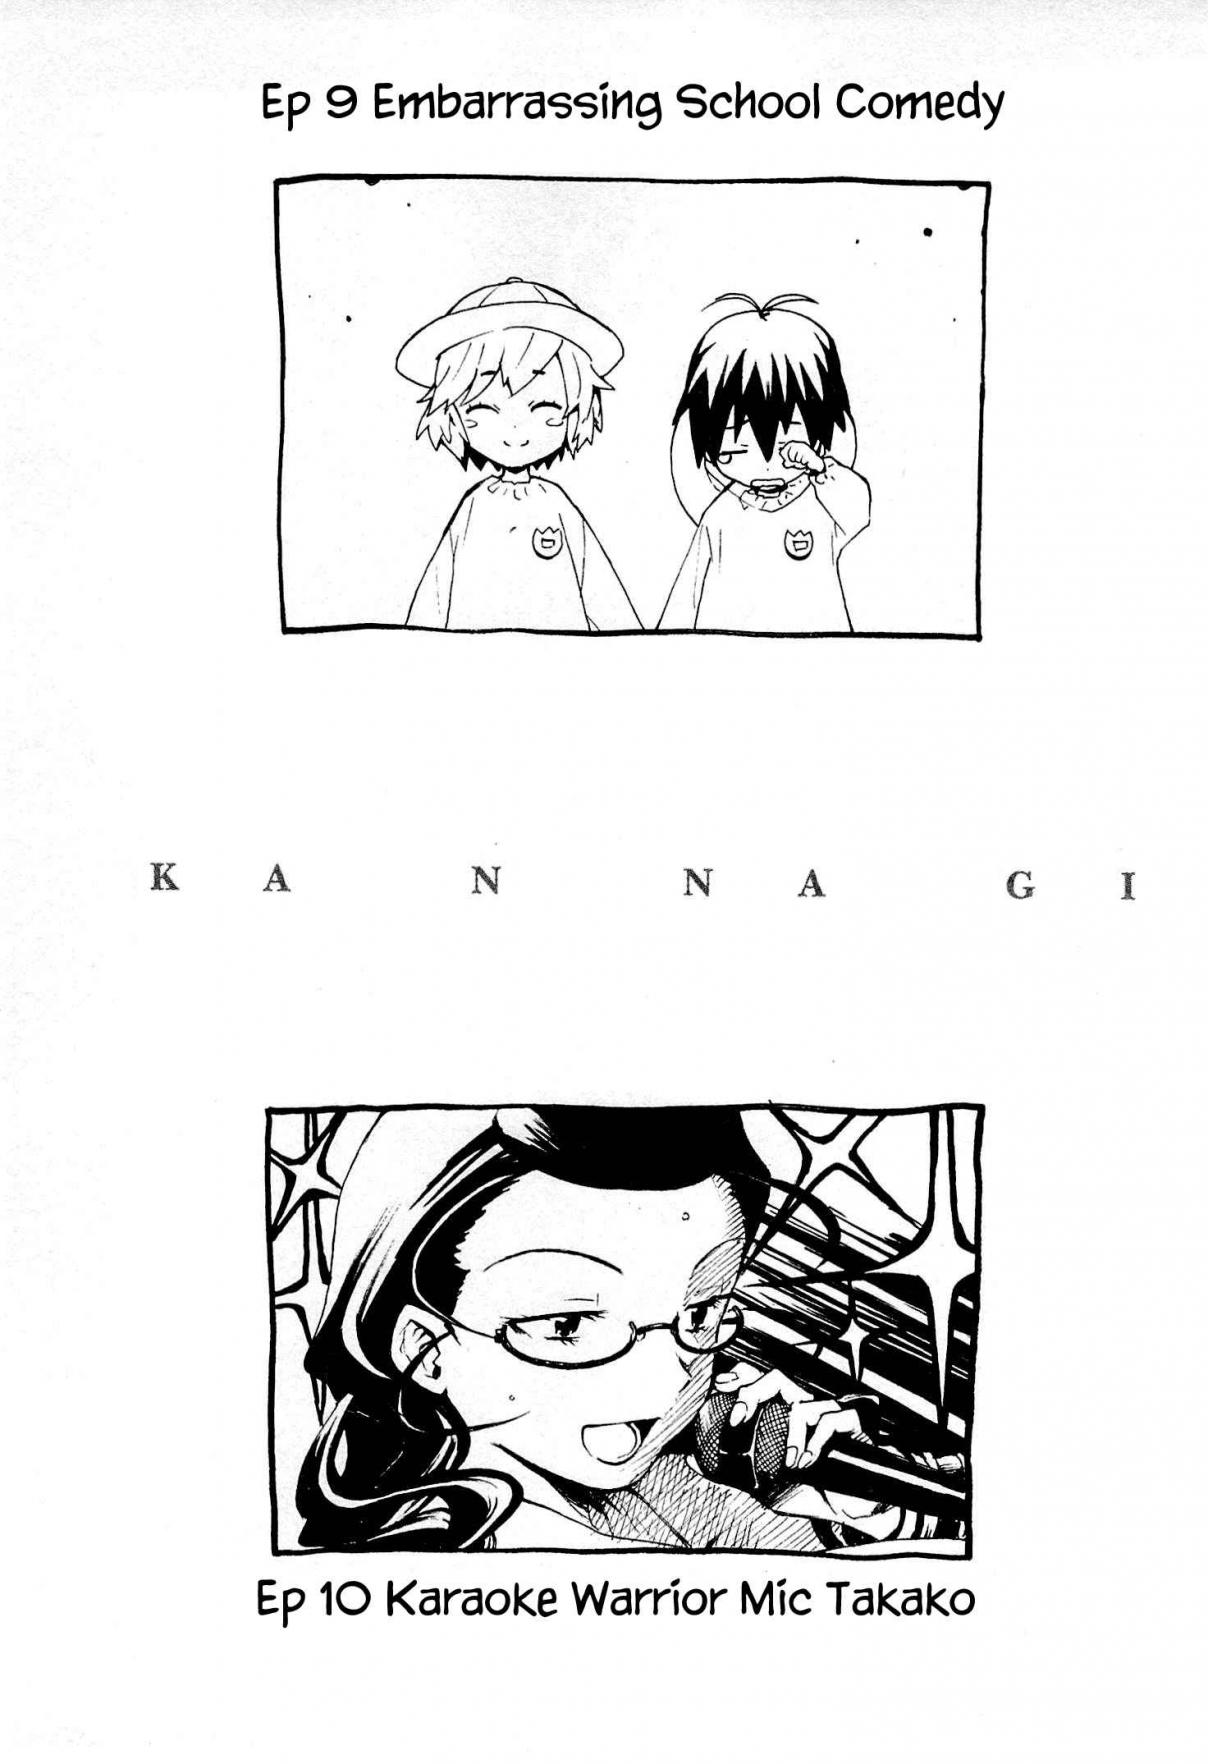 Kannagi Vol. 8 Ch. 48.6 anime script book cover illustrations